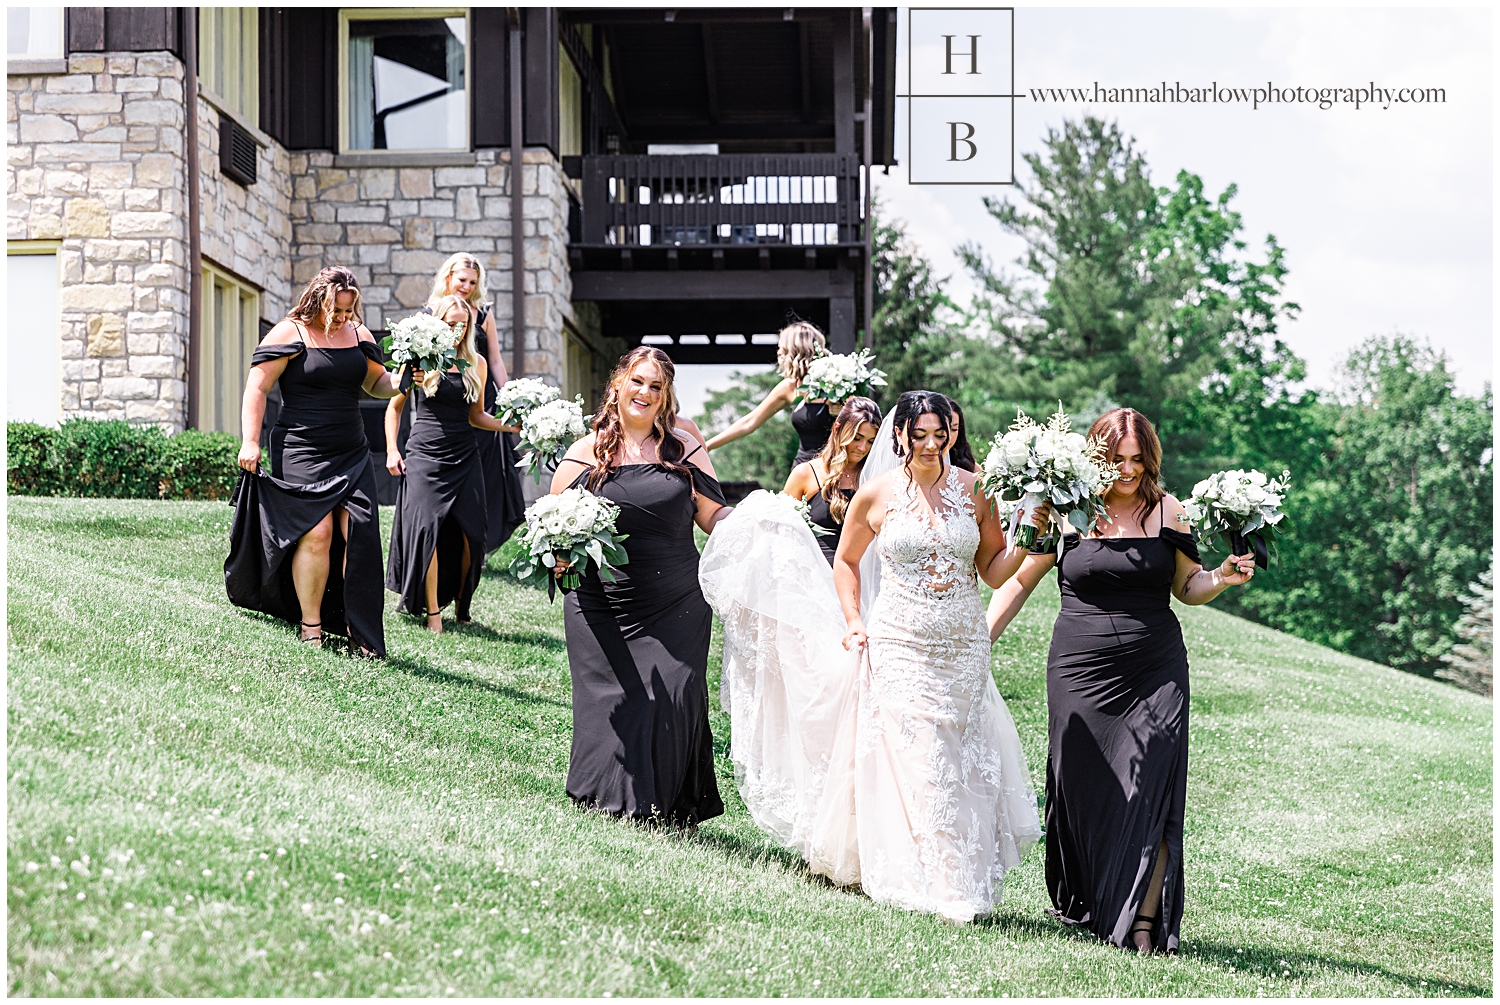 Bridesmaids in black dresses help bride walk down hill.